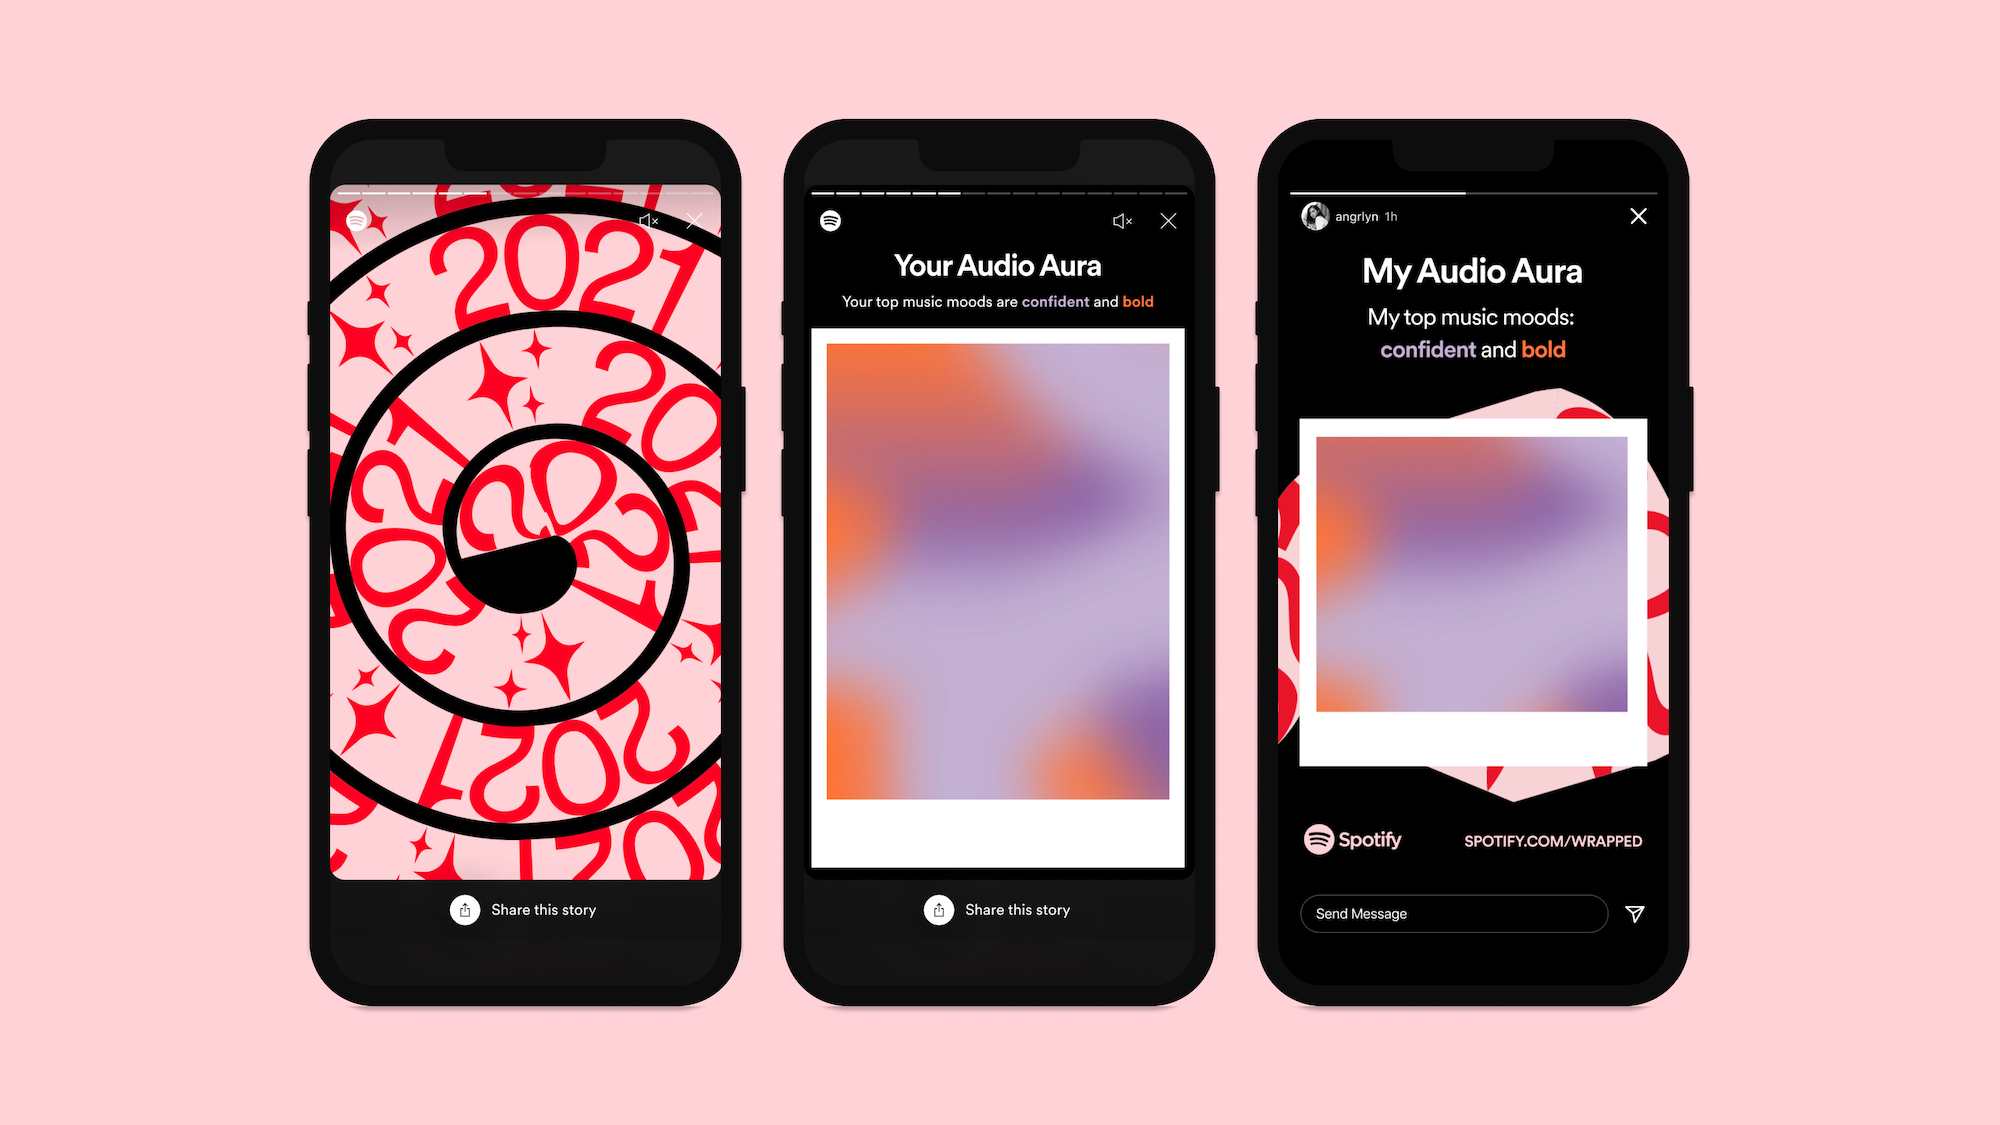 Spotify Wrapped's new Audio Aura